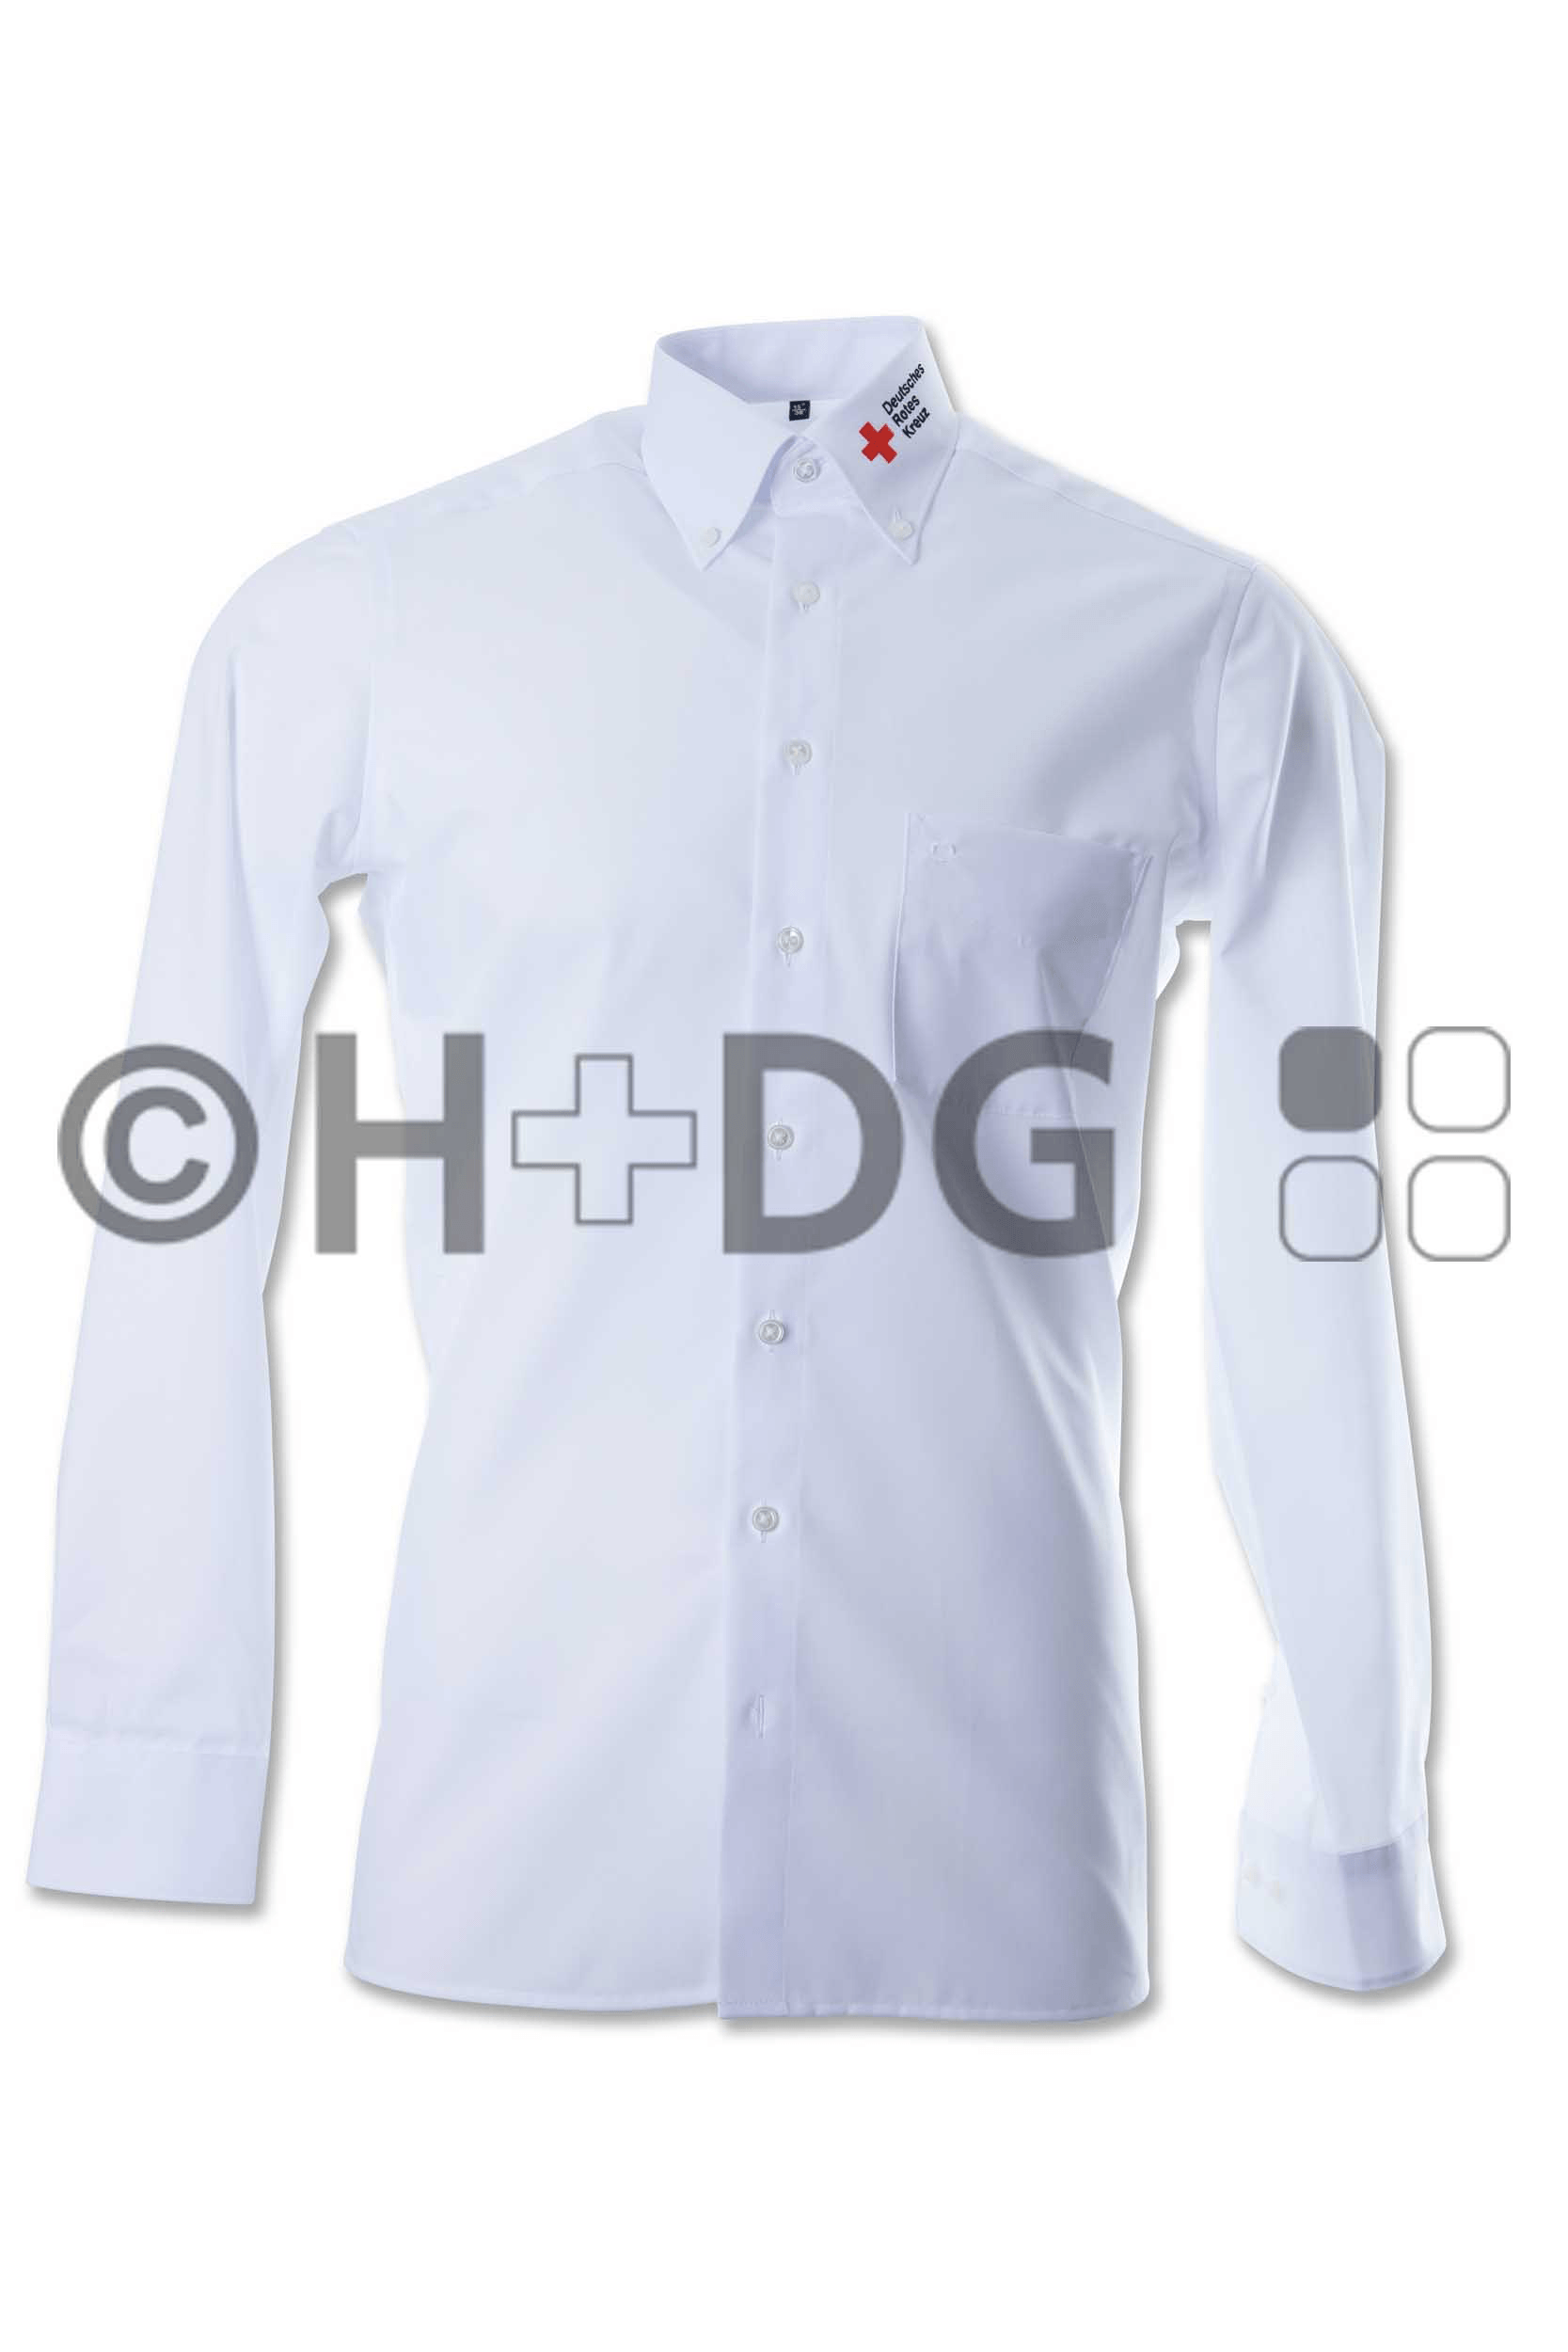 DRK-Olymp-Businesshemd Luxor (modern fit) weiß, H+DG | 1/2-Arm oder 1/1-Arm